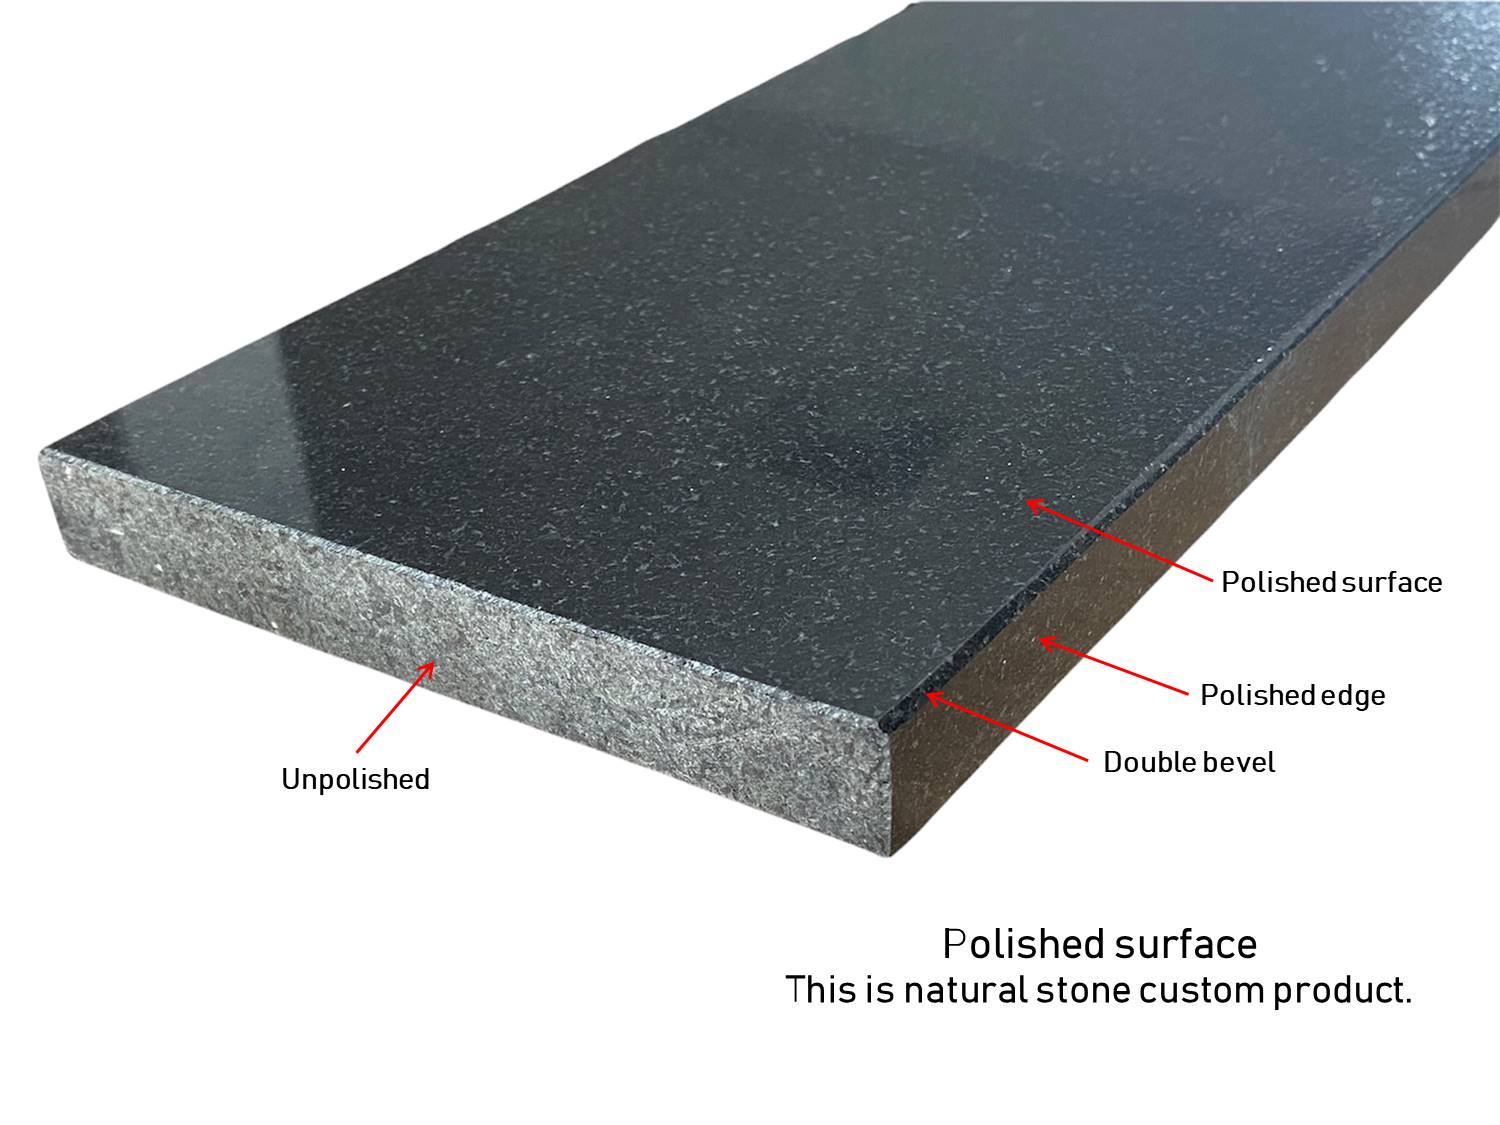 Tenedos Black Absolute Granite Marble Floor Transition Doorway Threshold Tile (Marble Saddle) Polished for Shower Curb, Window Sill, Vanity Backsplash